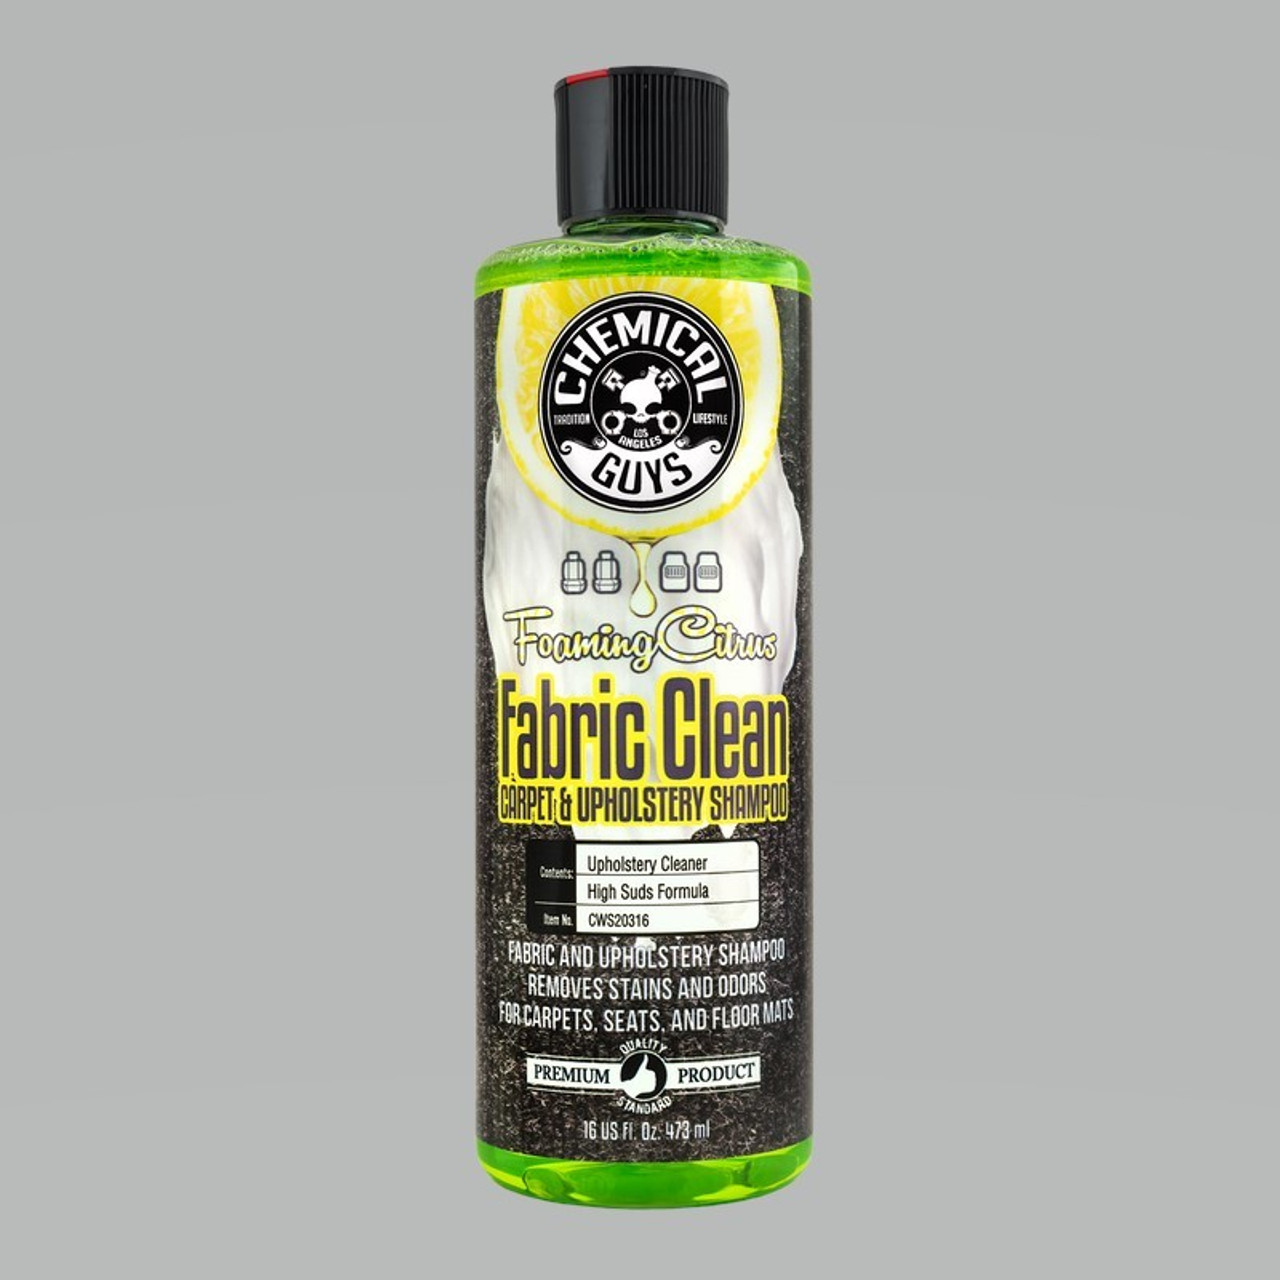 Chemical Guys Vanilla Bean Air Freshener & Odor Eliminator - 16oz